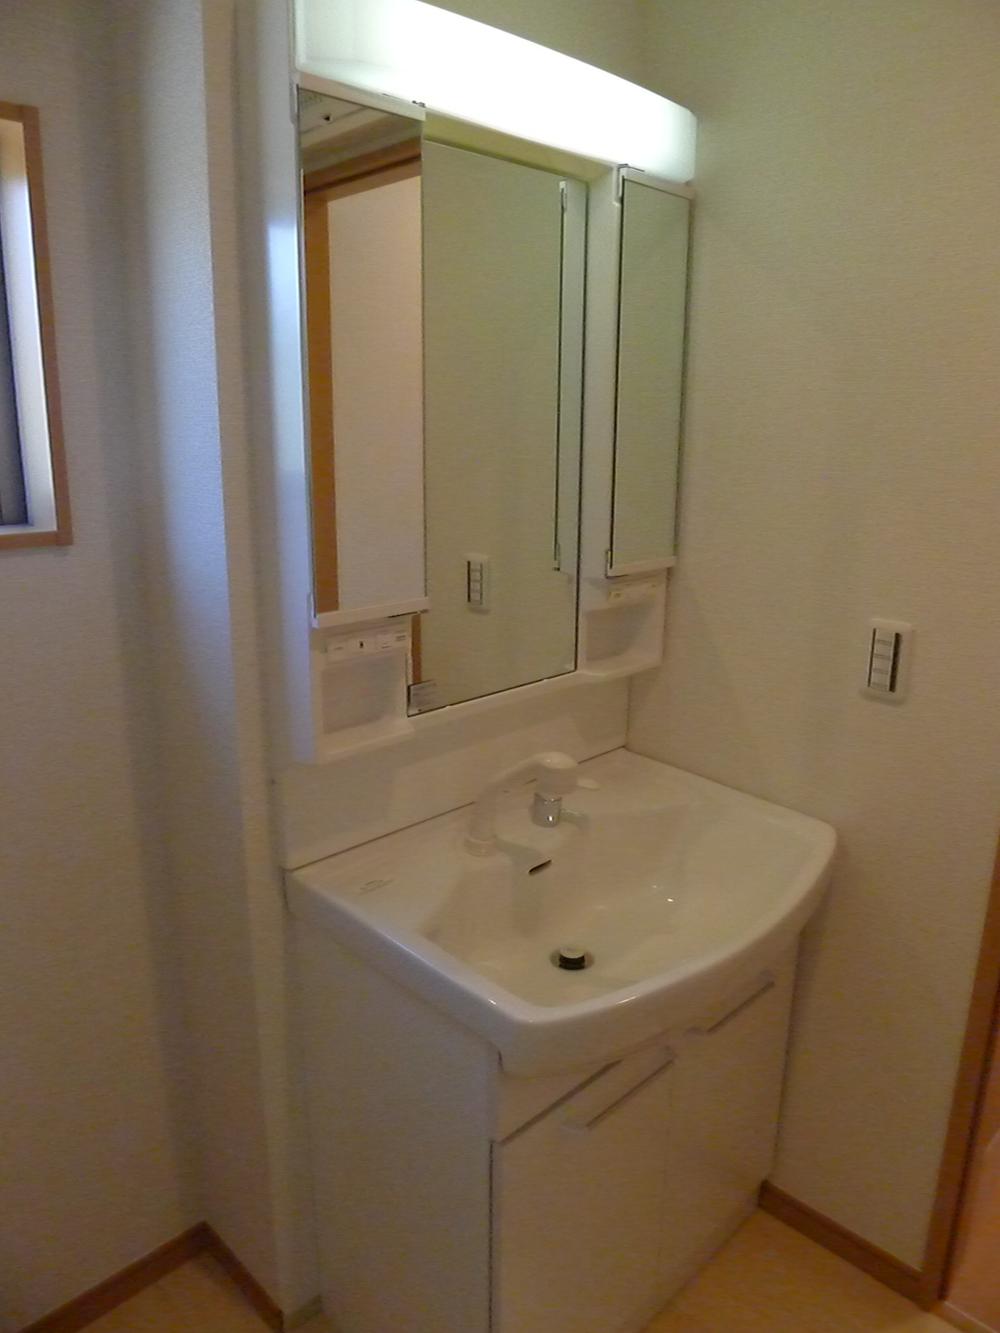 Wash basin, toilet. Three-sided mirror ・ System kitchen